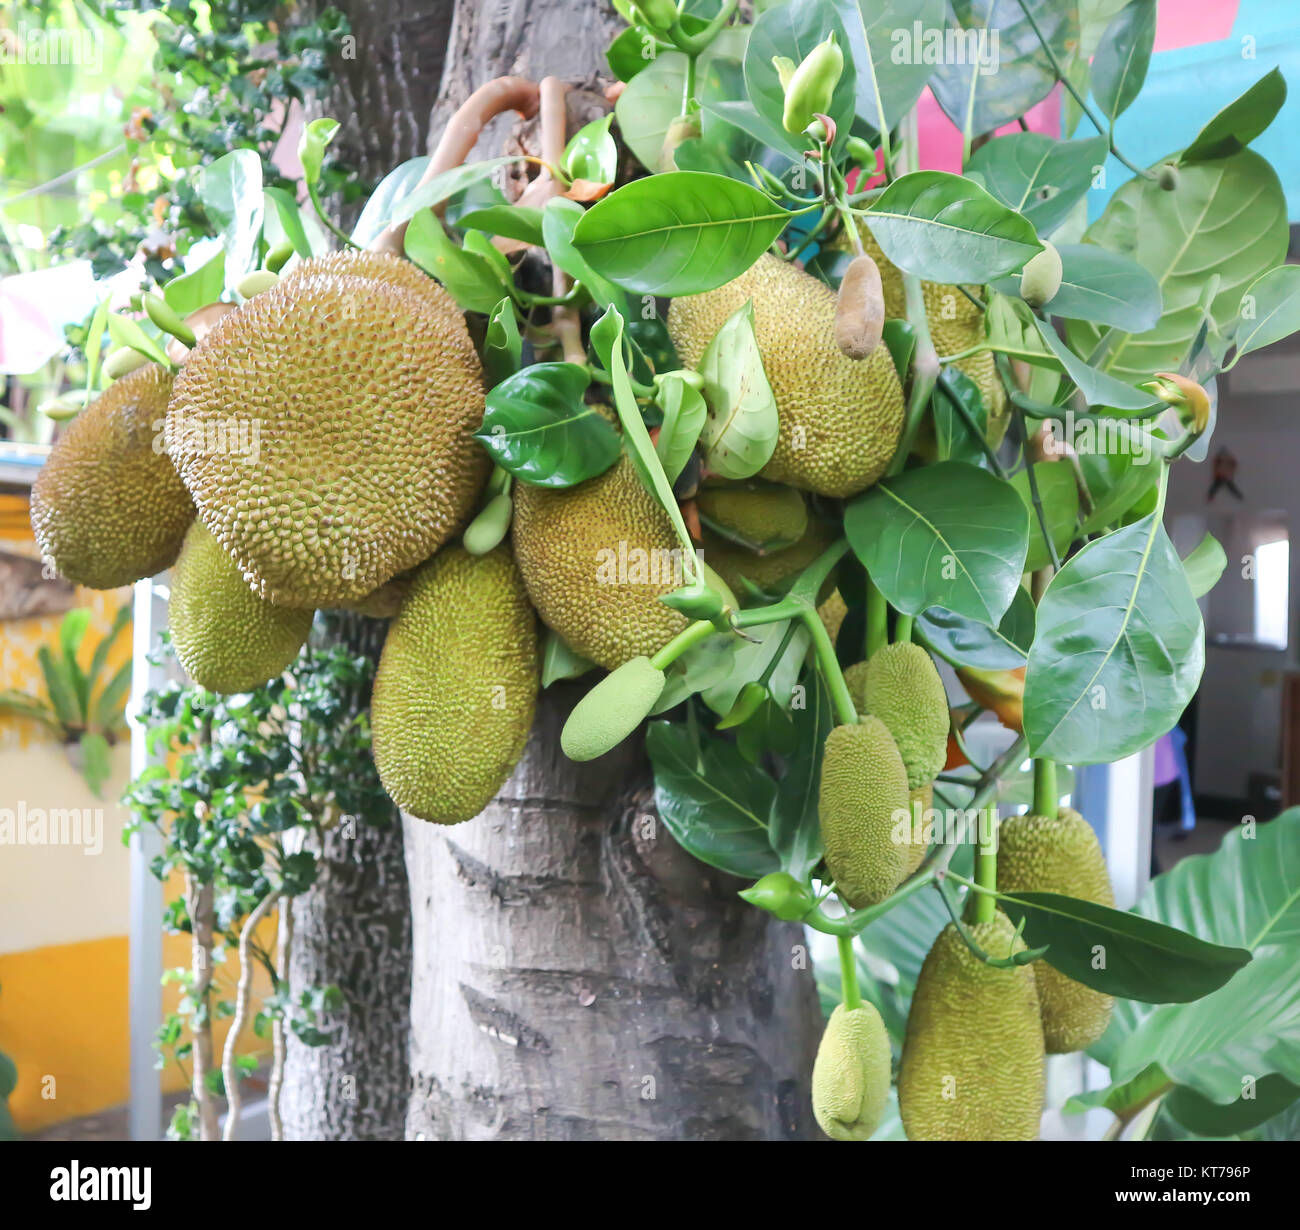 jackfruit , jackfruit plant or jackfruit tree Stock Photo